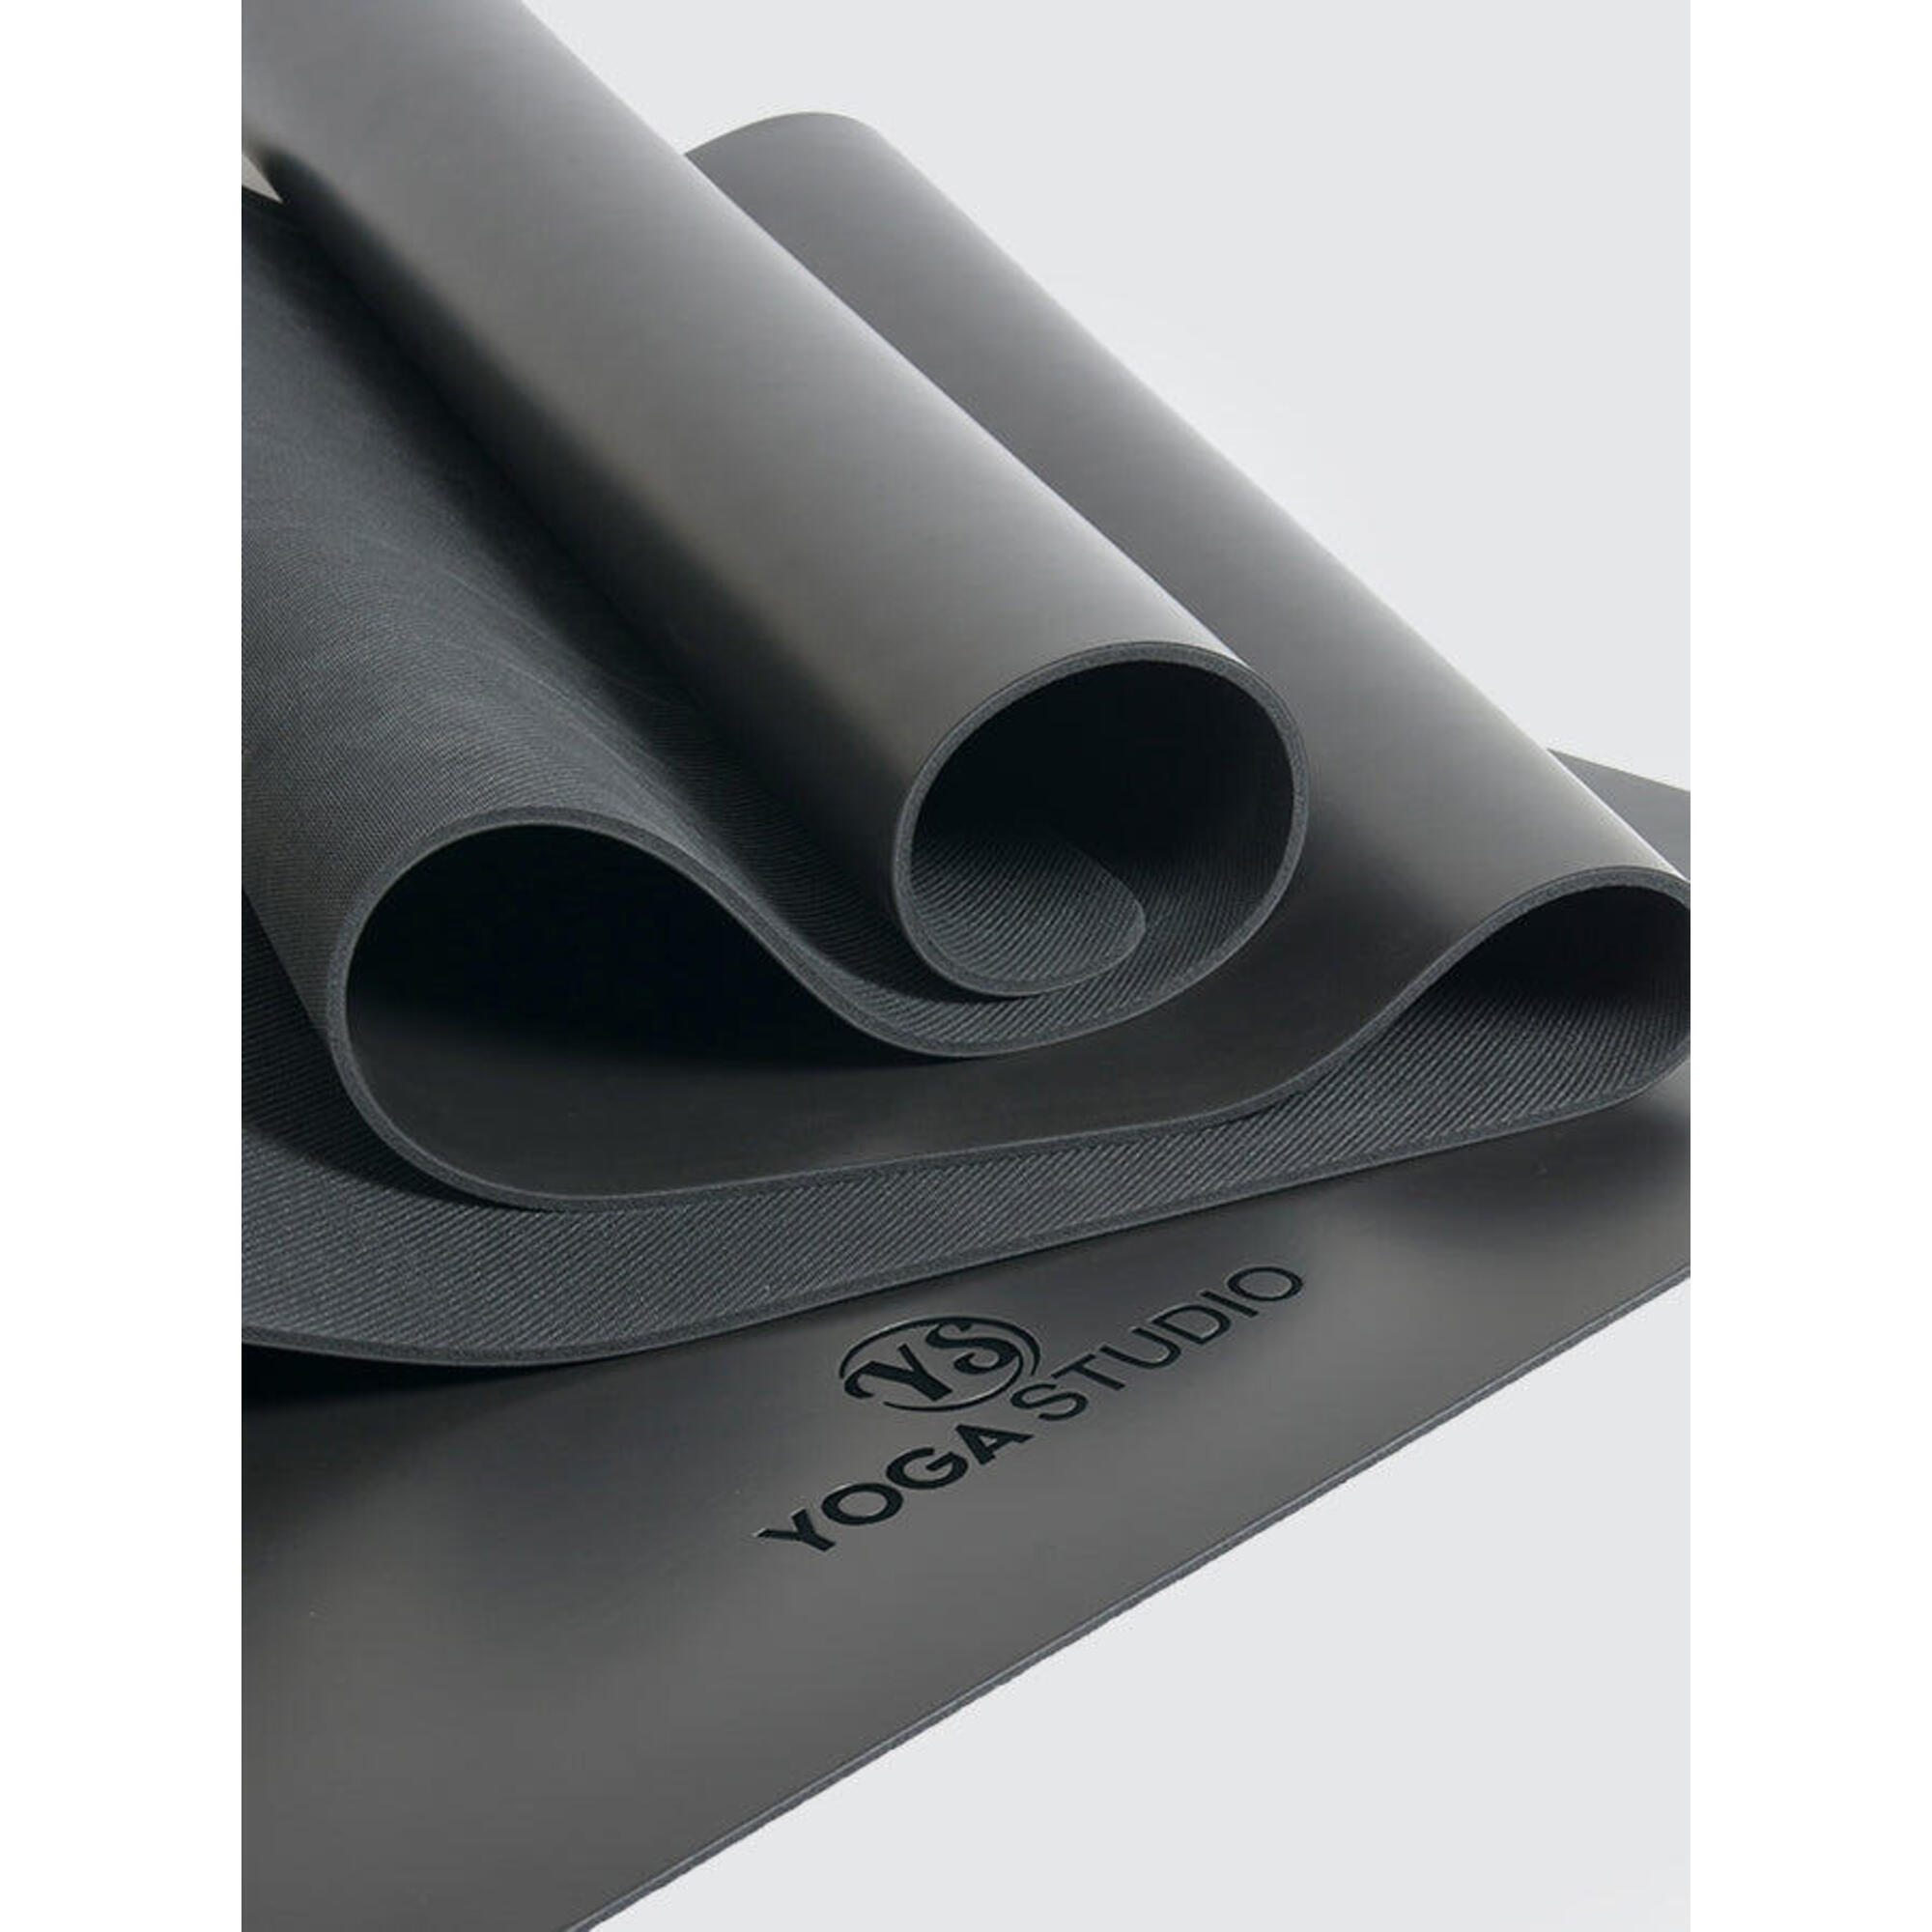 YOGA STUDIO Yoga Studio The Grip Compact Yoga Mat 4mm - Black